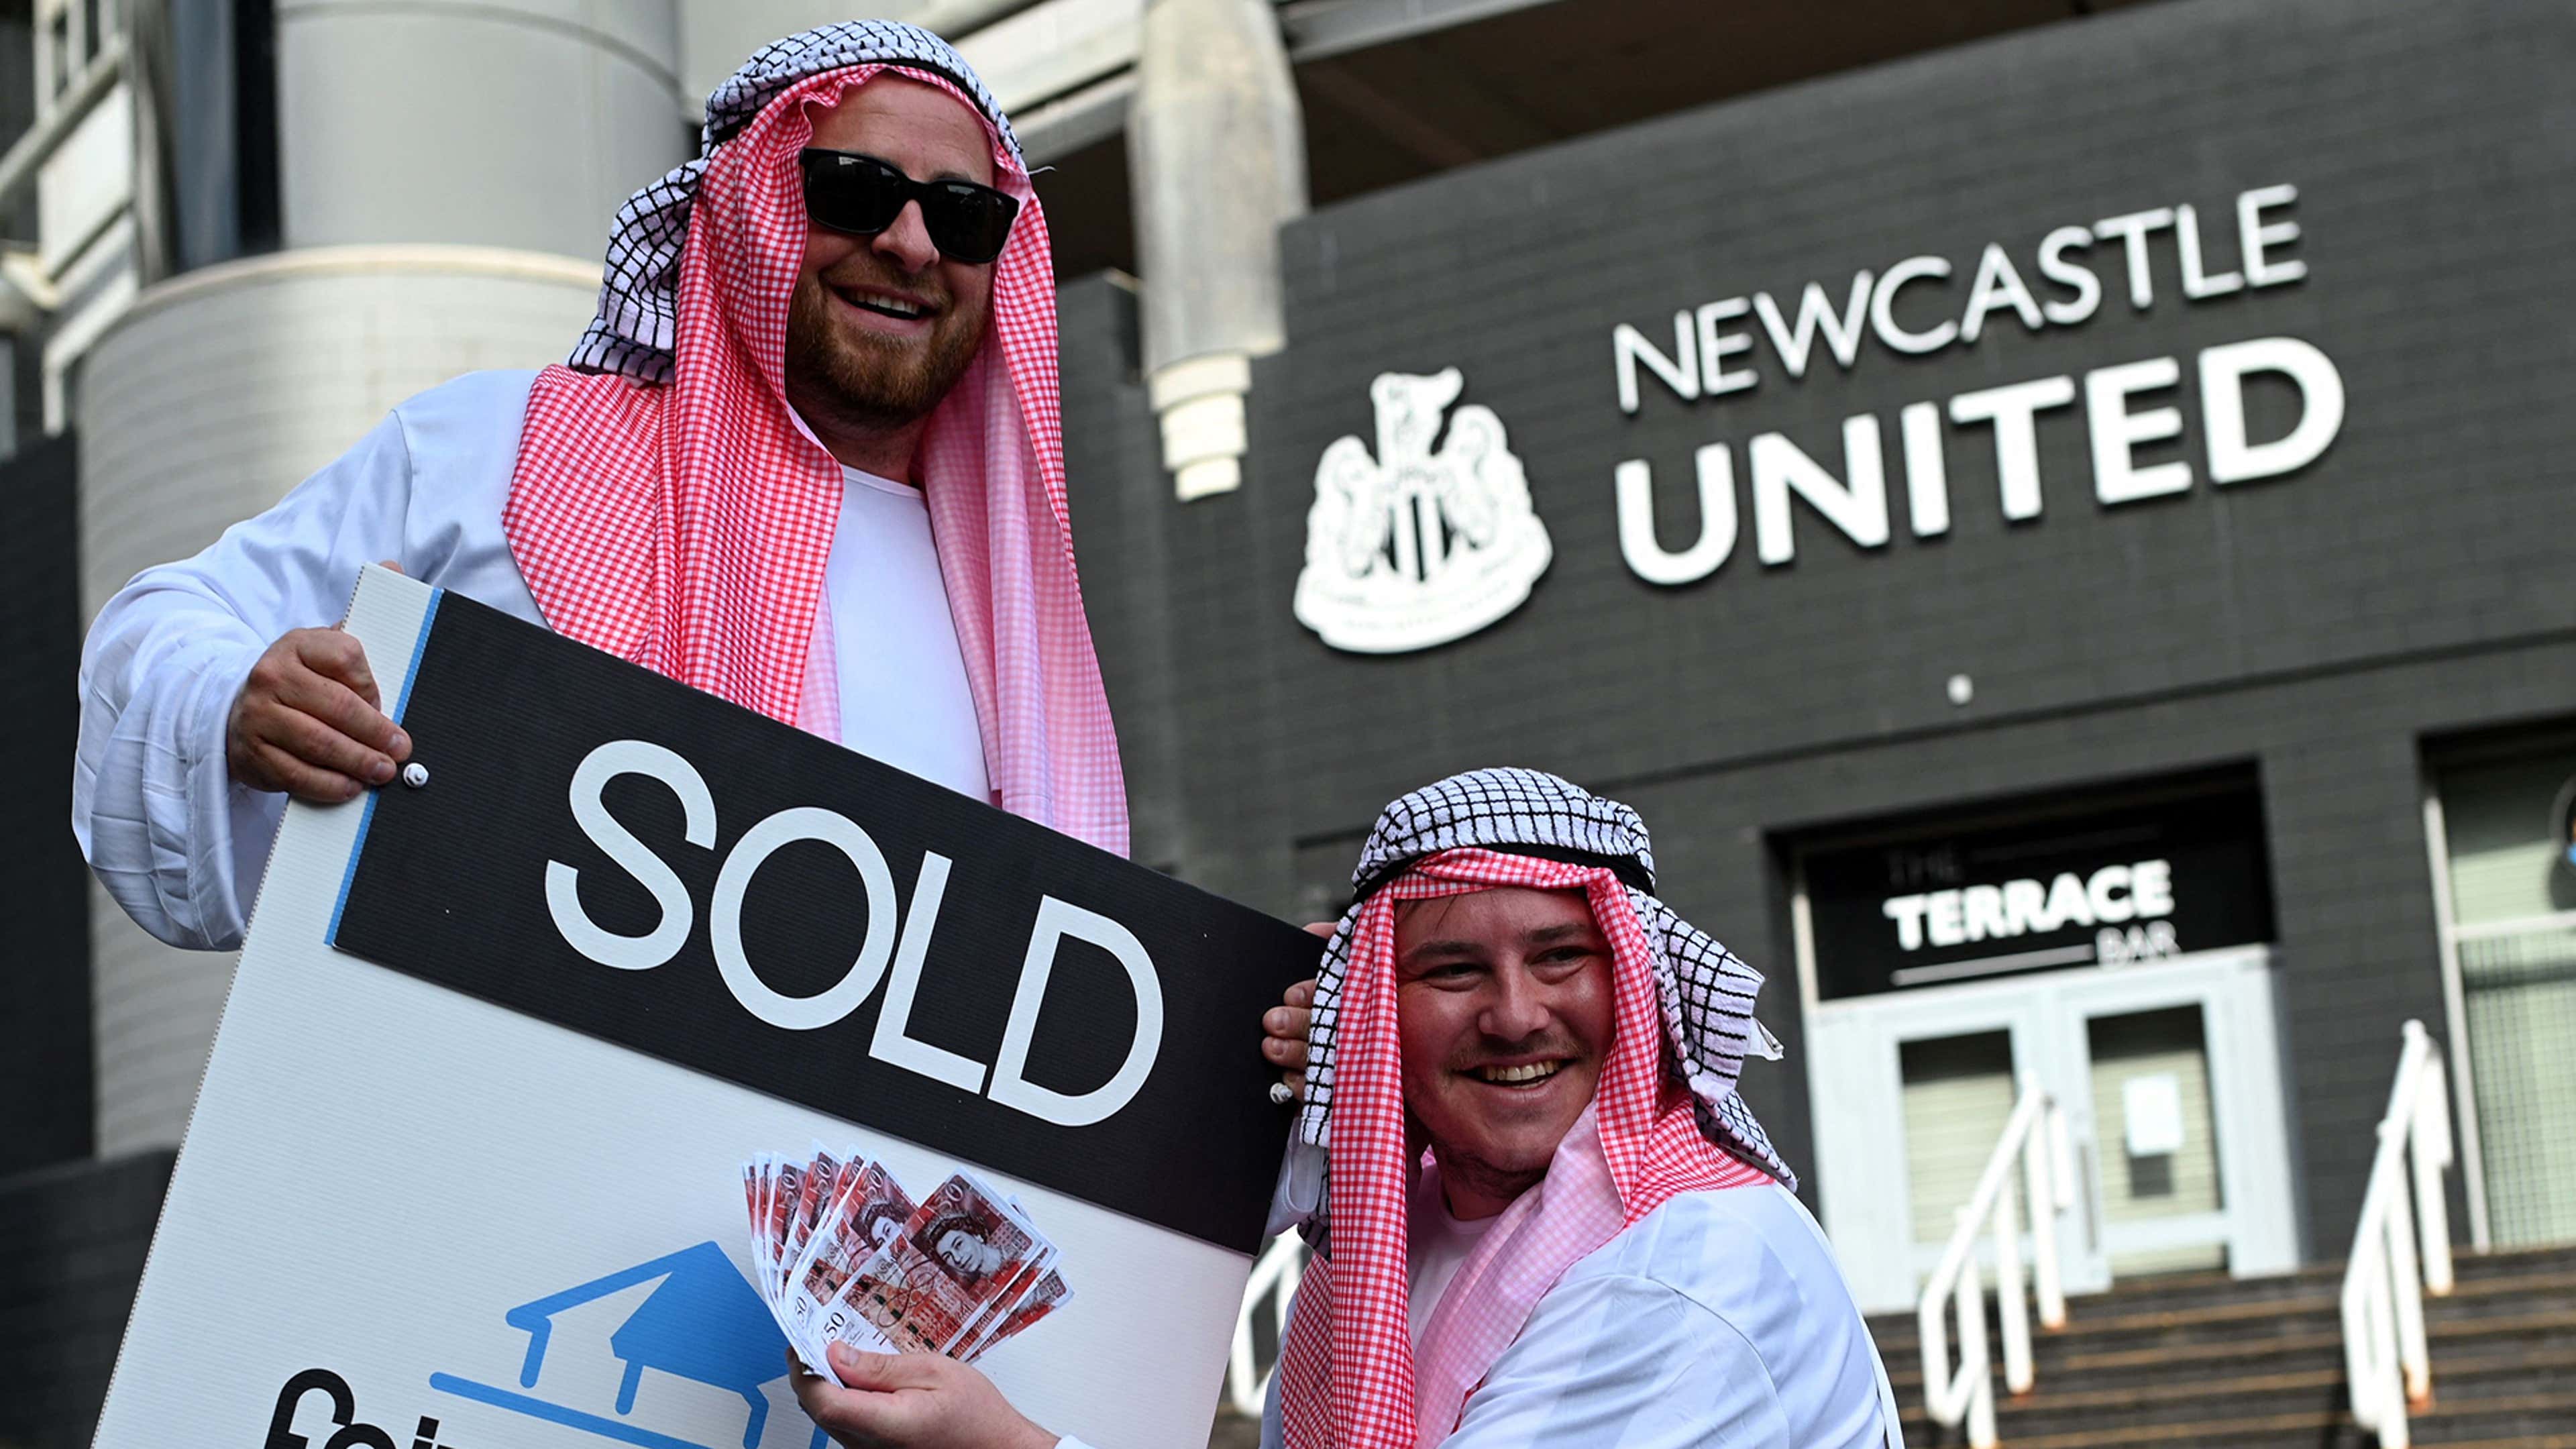 Newcastle United fans Saudi Arabia takeover 2022